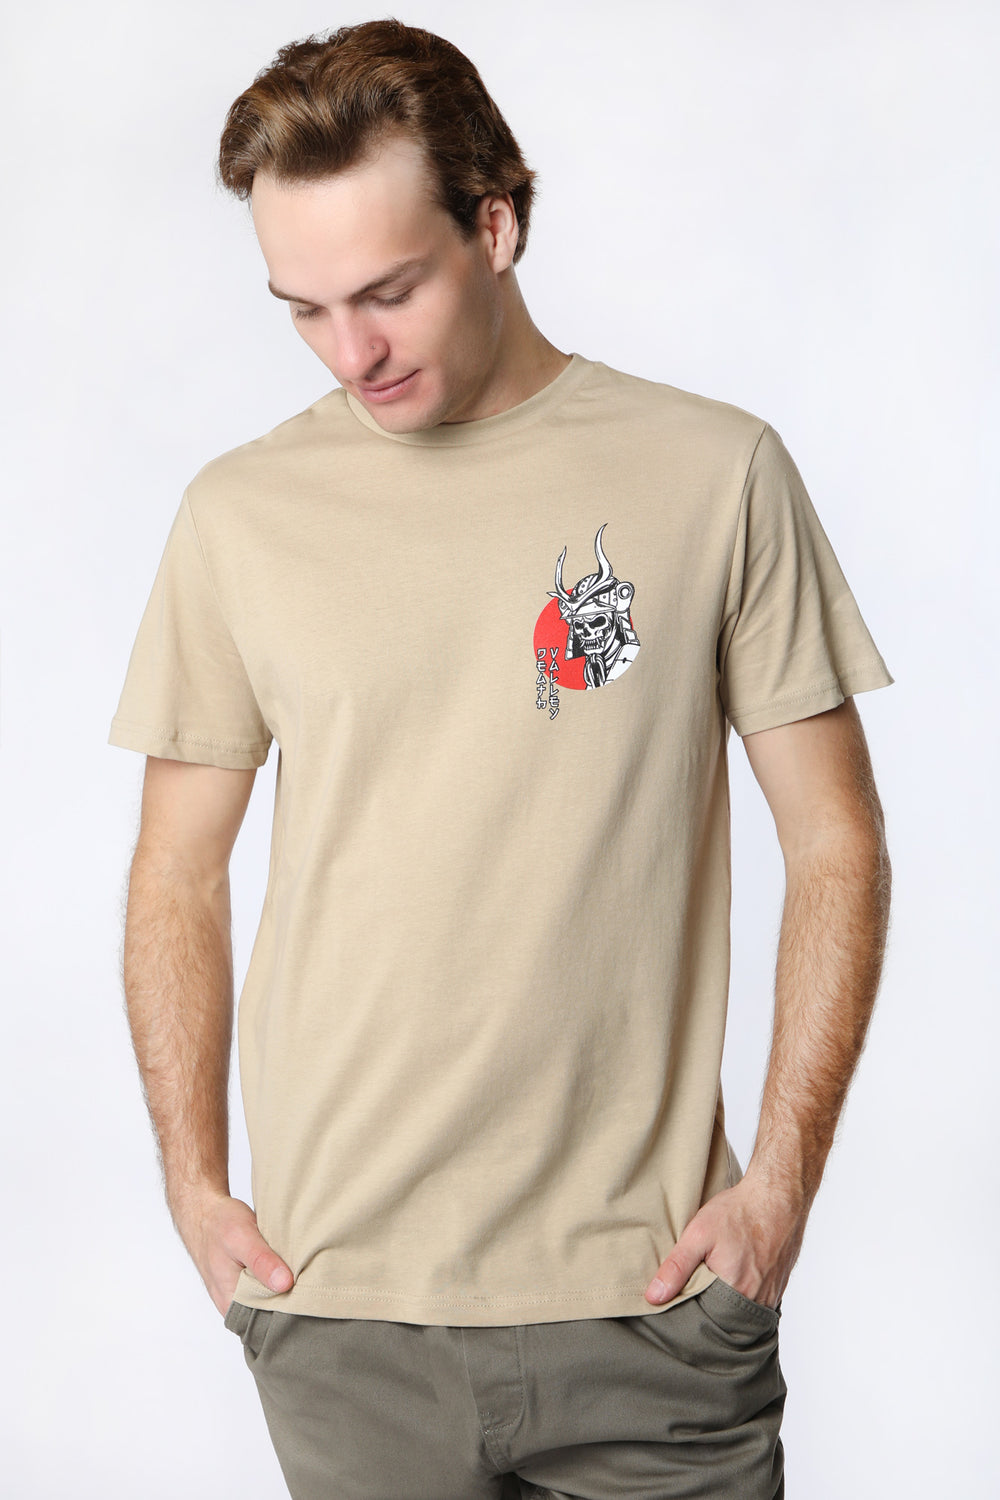 T-Shirt Imprimé Samouraï Death Valley Homme T-Shirt Imprimé Samouraï Death Valley Homme